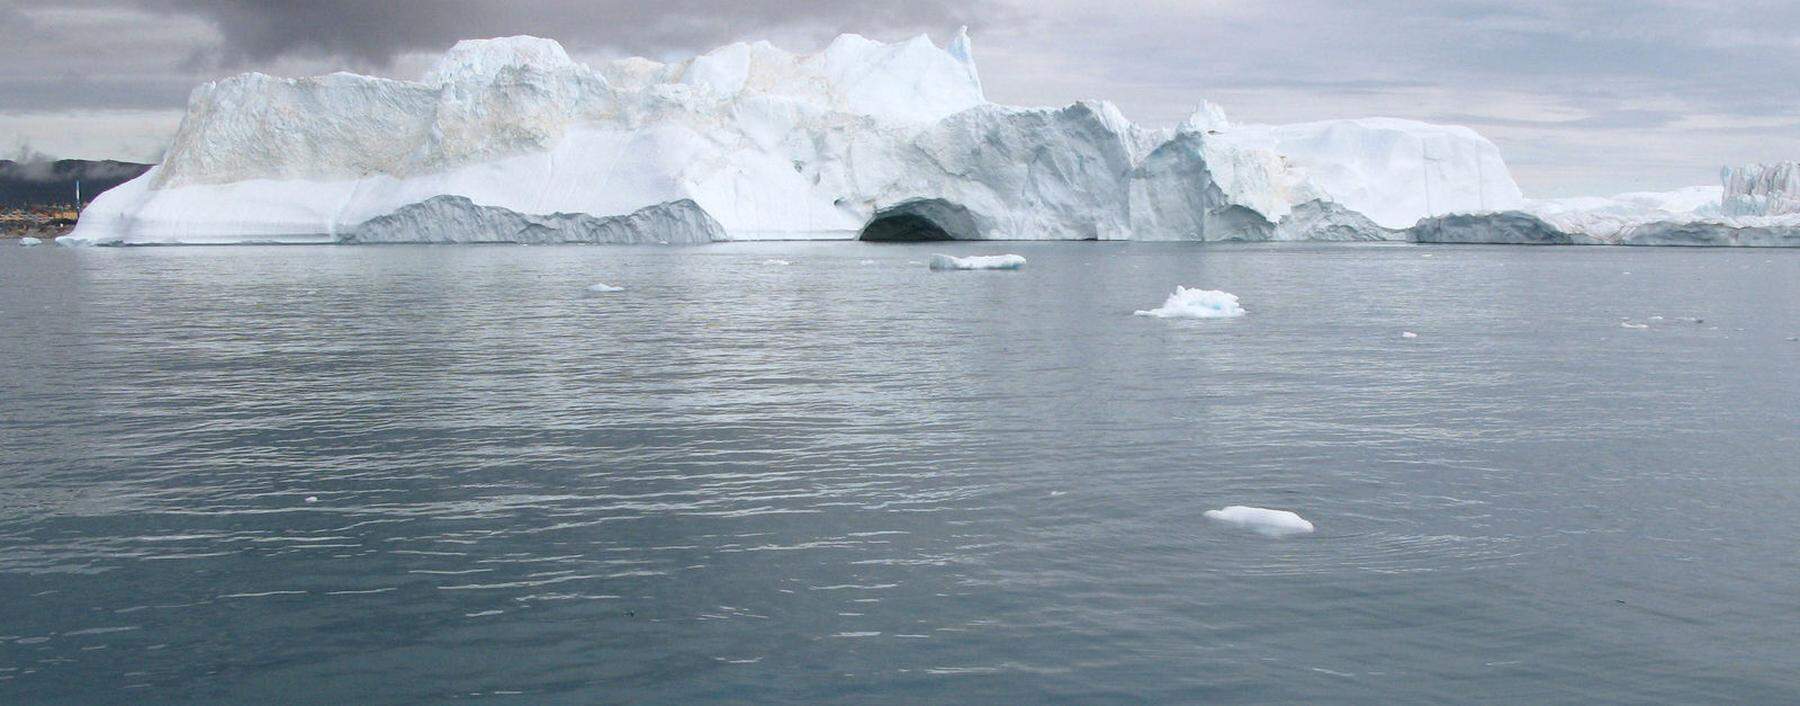 Weil am Nordpol das Eis zurückgeht, gerät das Meer speziell vor Russlands Nordküste ins Blickfeld des Interesses.